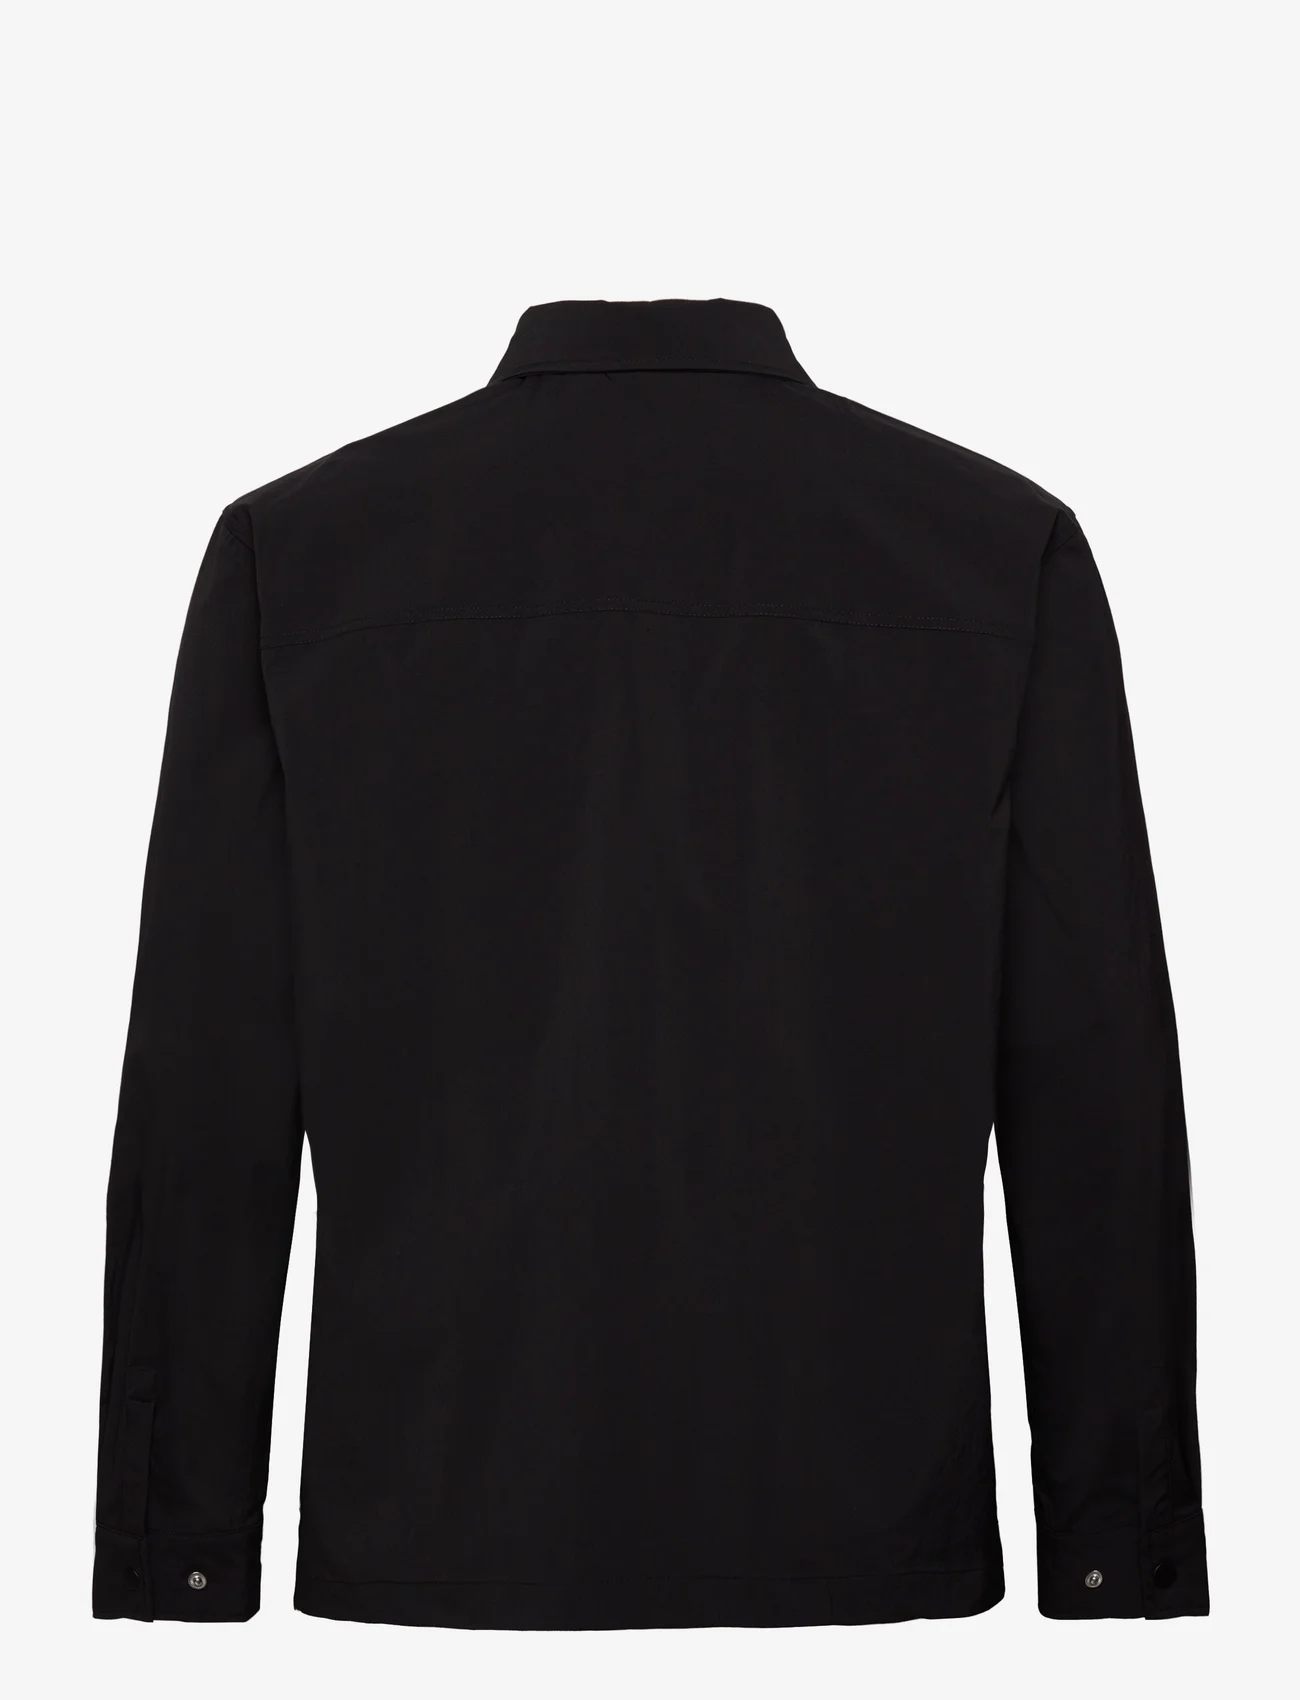 HAN Kjøbenhavn - Nylon Patch Pocket Shirt Long Sleeve - men - black - 1